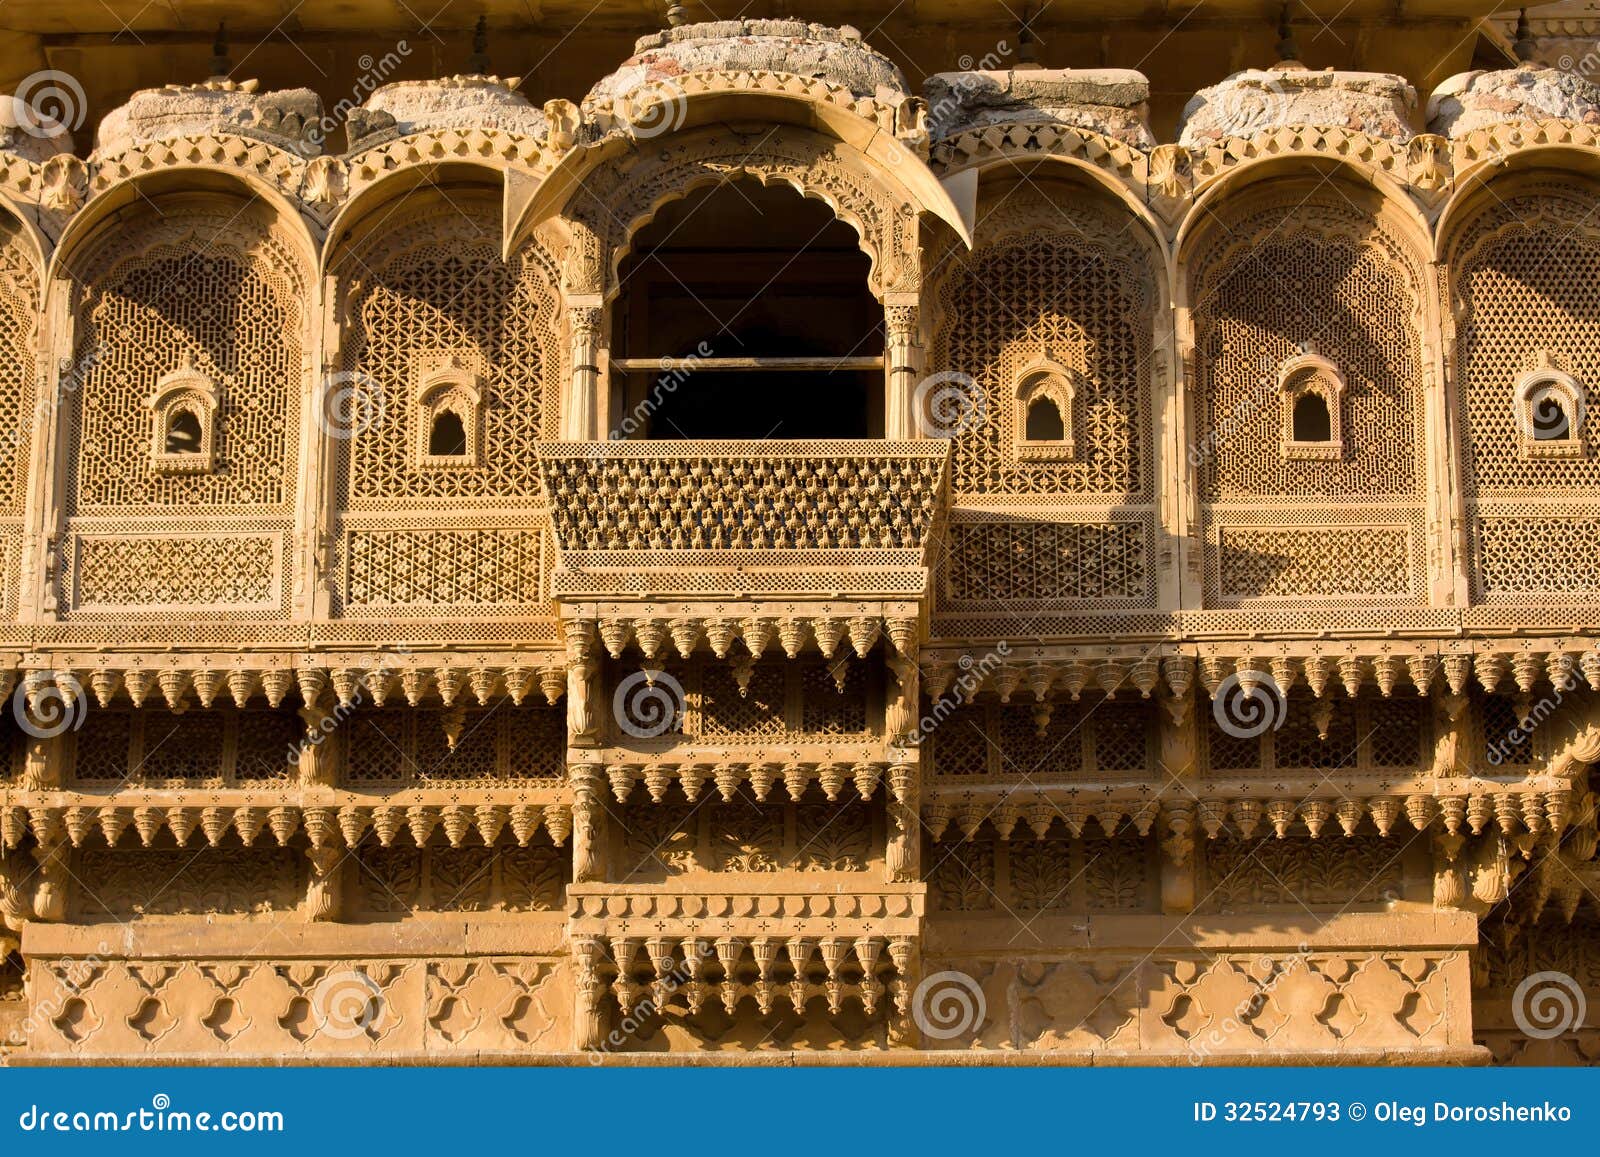 Haveli in Jaisalmer, Rajasthan, India Stock Image - Image of balcony, jainist: 32524793